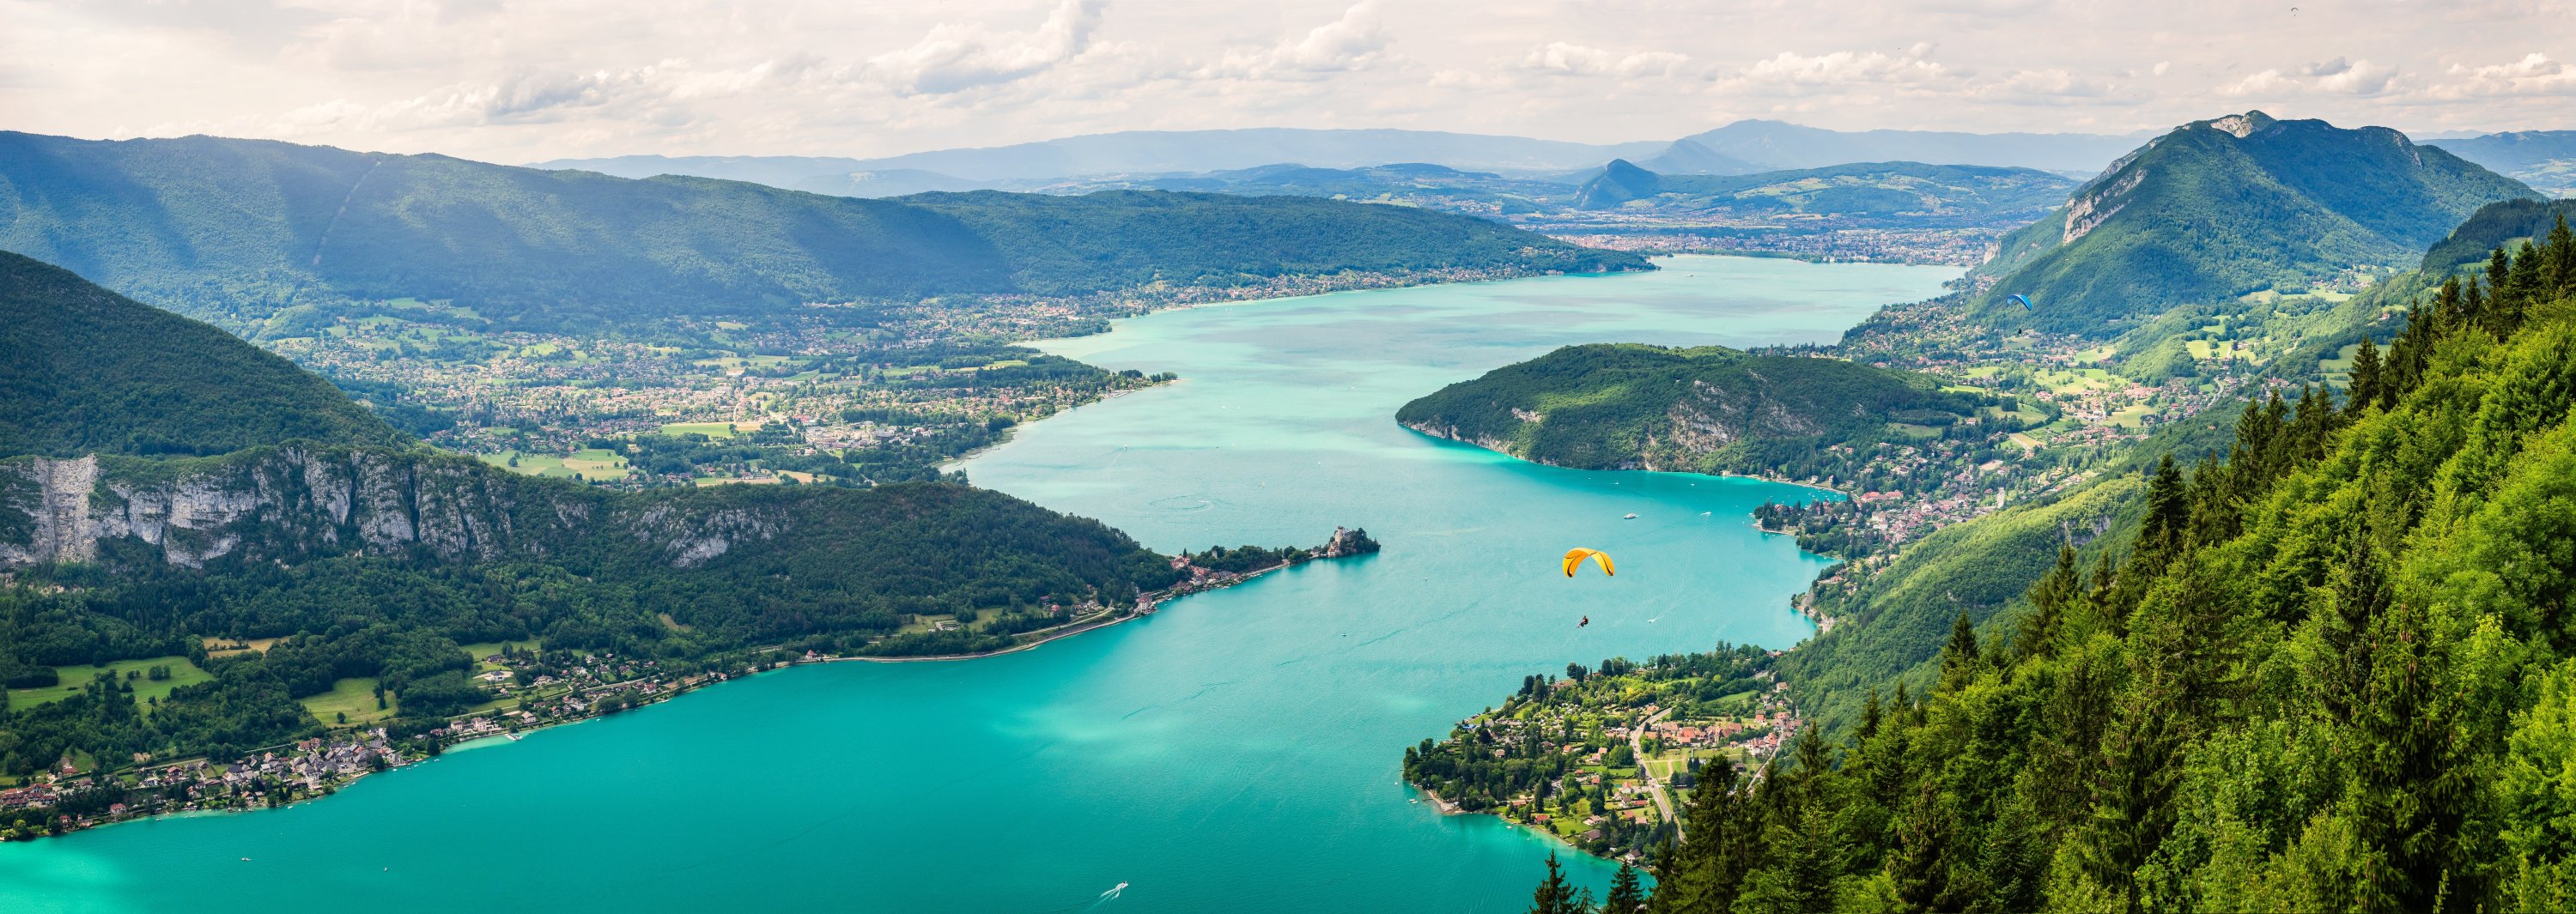 Pemandangan panorama Danau Annecy.  (Shutterstock) 